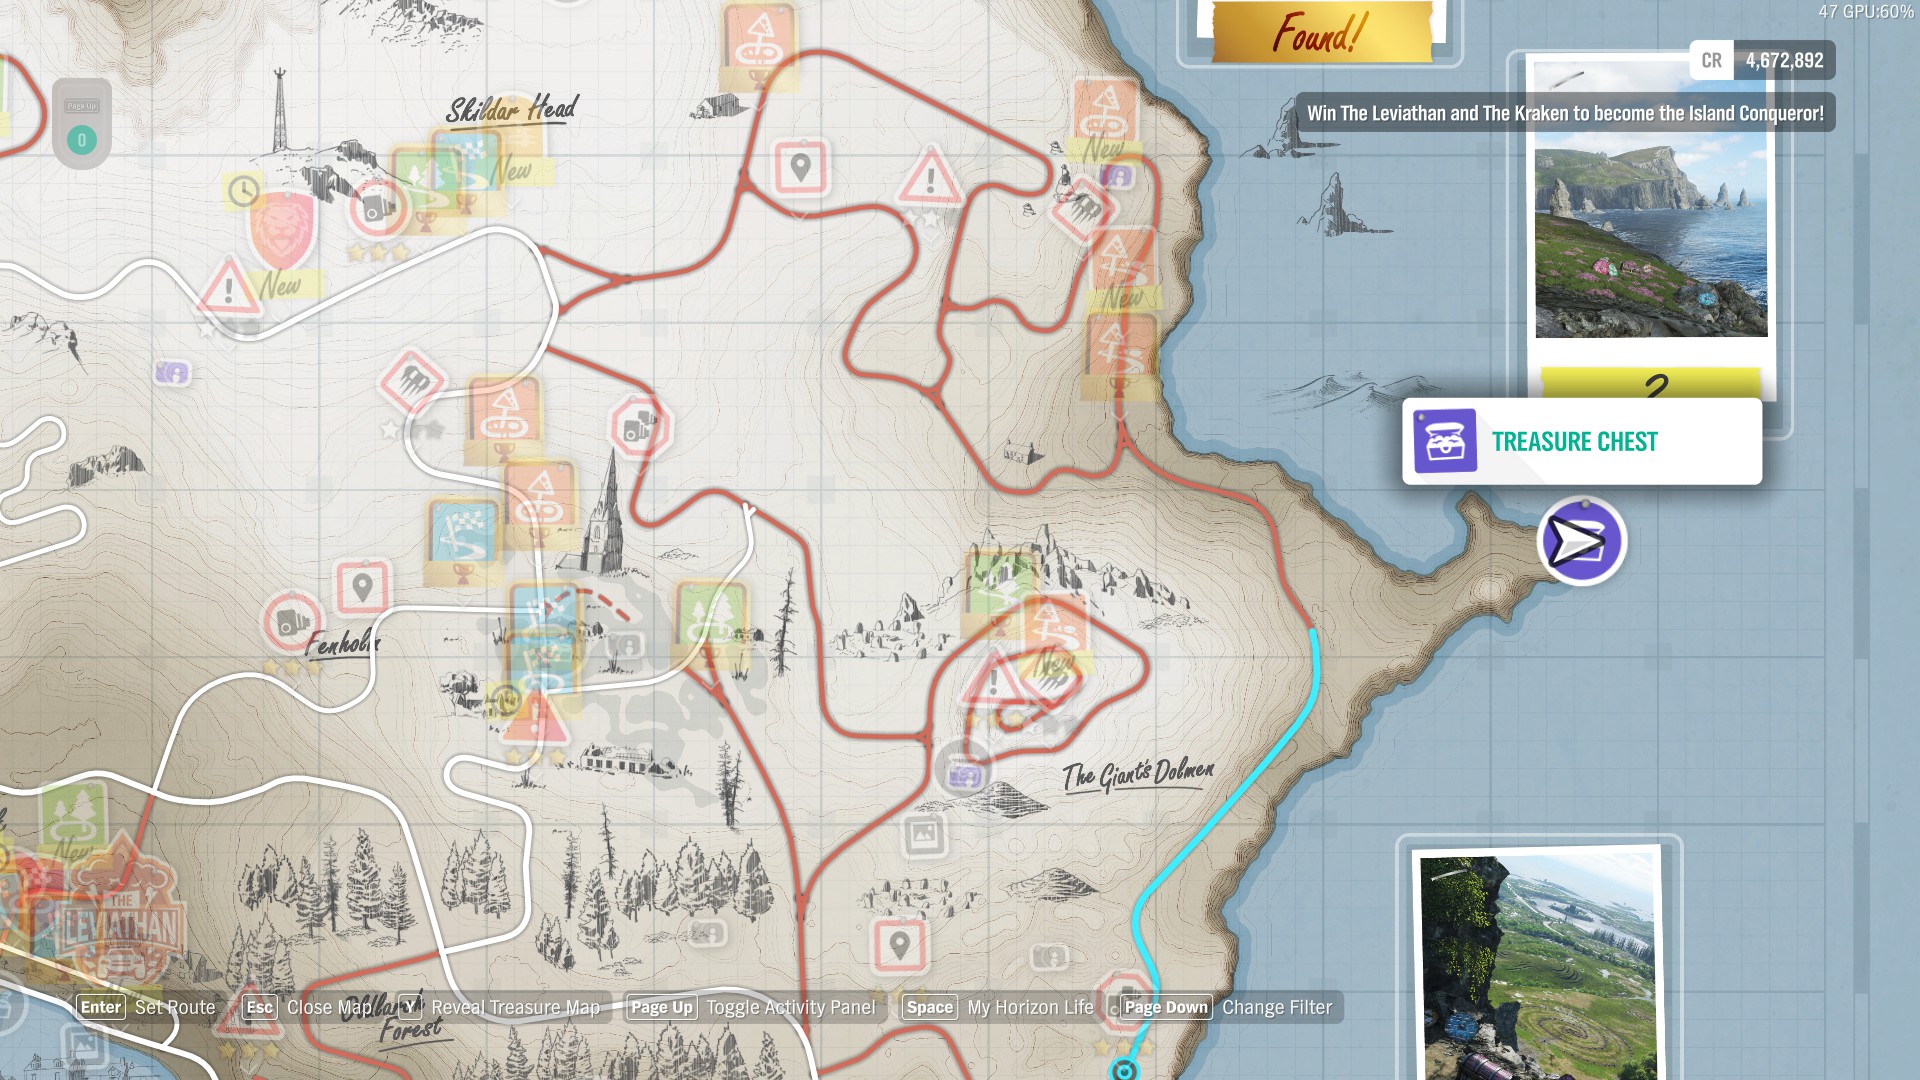 Forza horizon 4 island. Карта сокровищ Форза хорайзон 4. Остров фортуны Forza Horizon 4 сокровища. Сокровища Форчун Айленд Forza Horizon 4. Fortune Island Forza Horizon 4 Map.